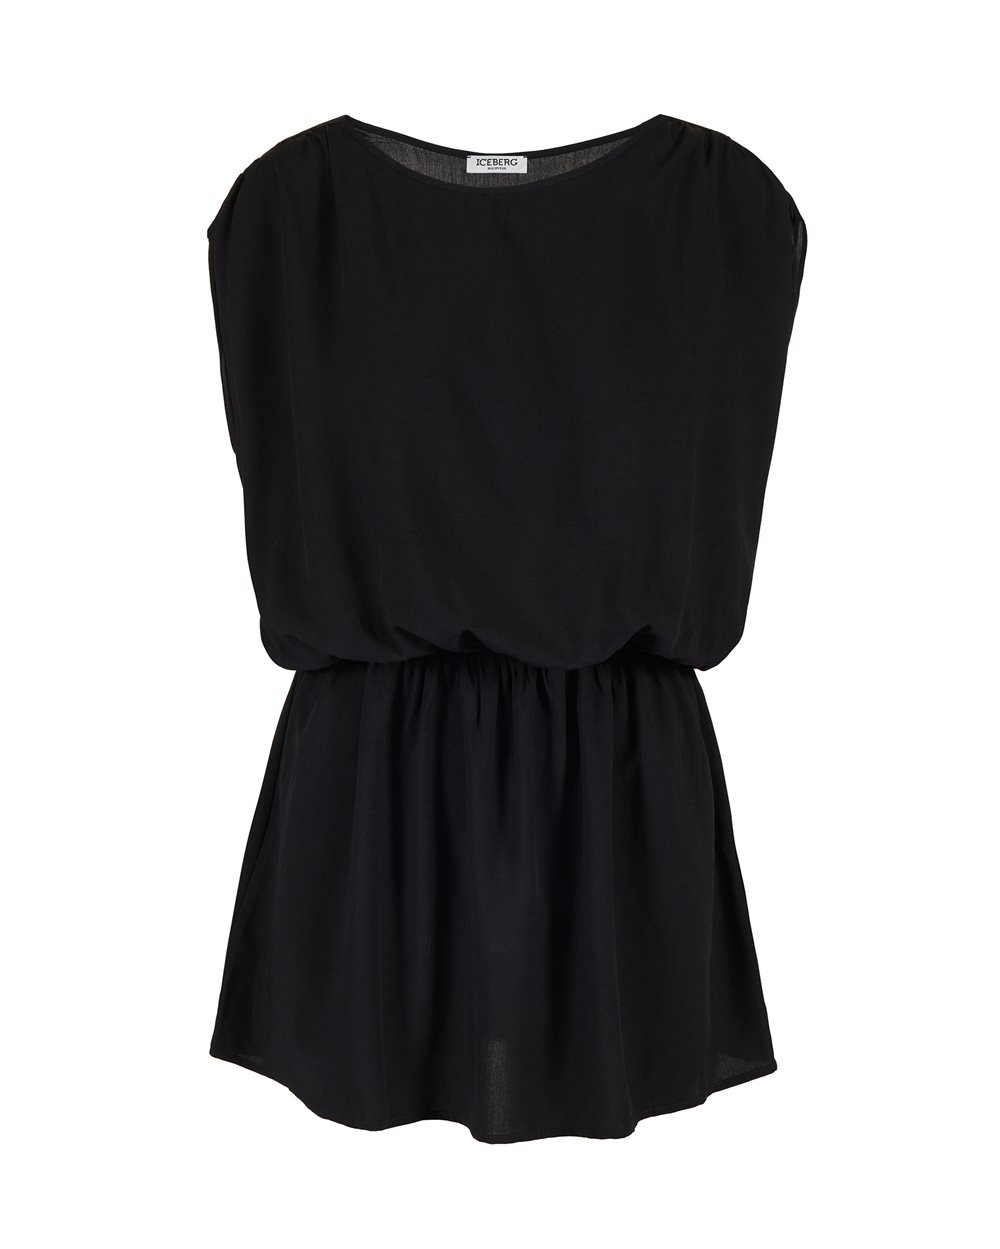 Black dress with logo - Beachwear | Iceberg - Official Website